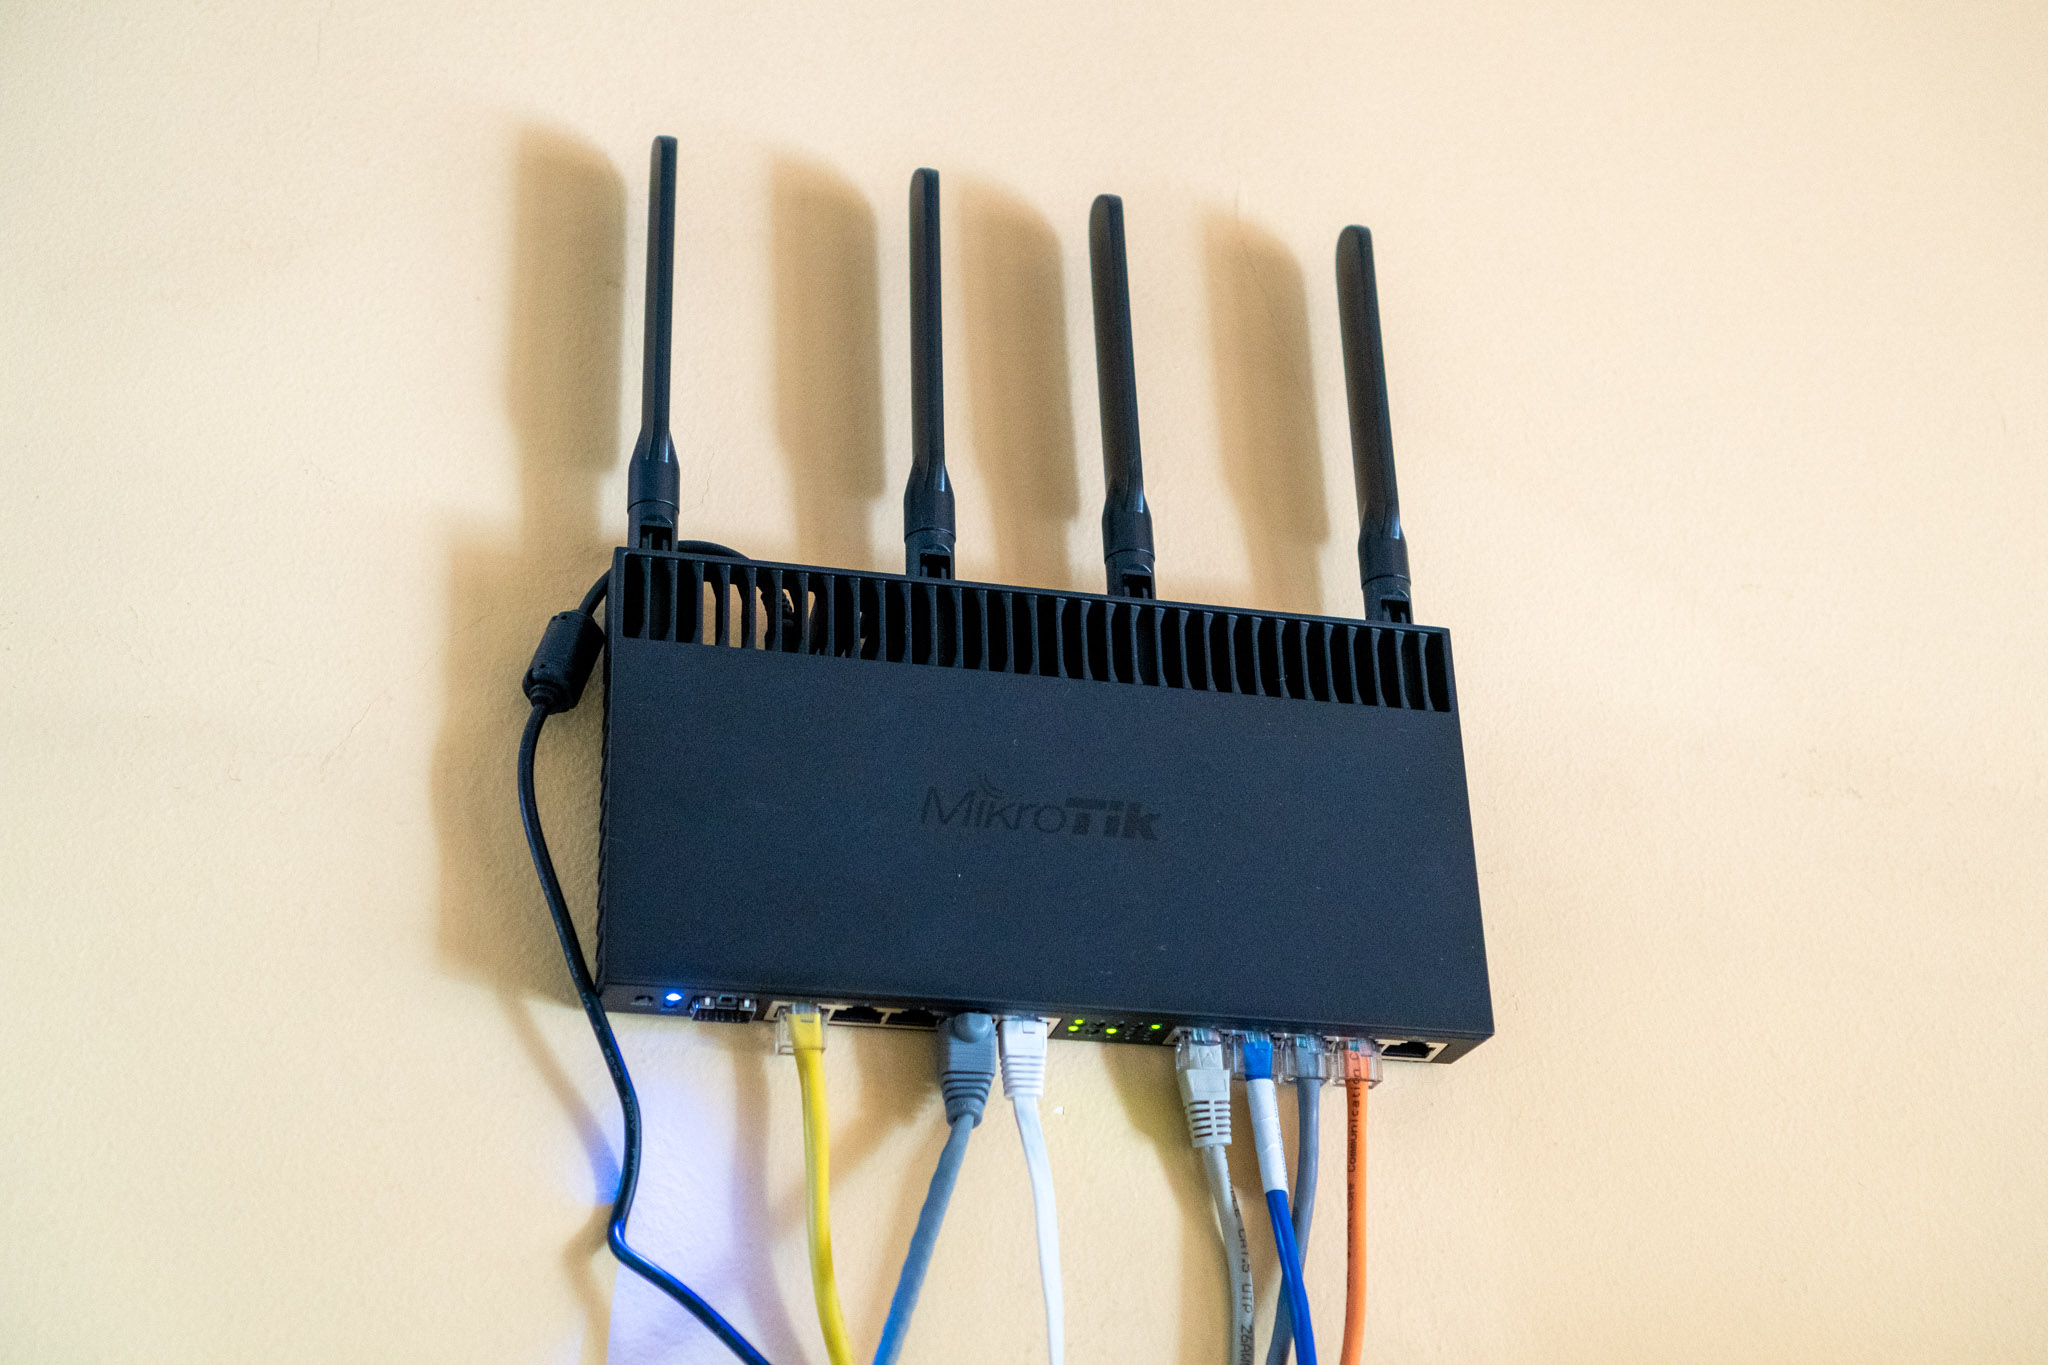 mikrotik routeros multi wan